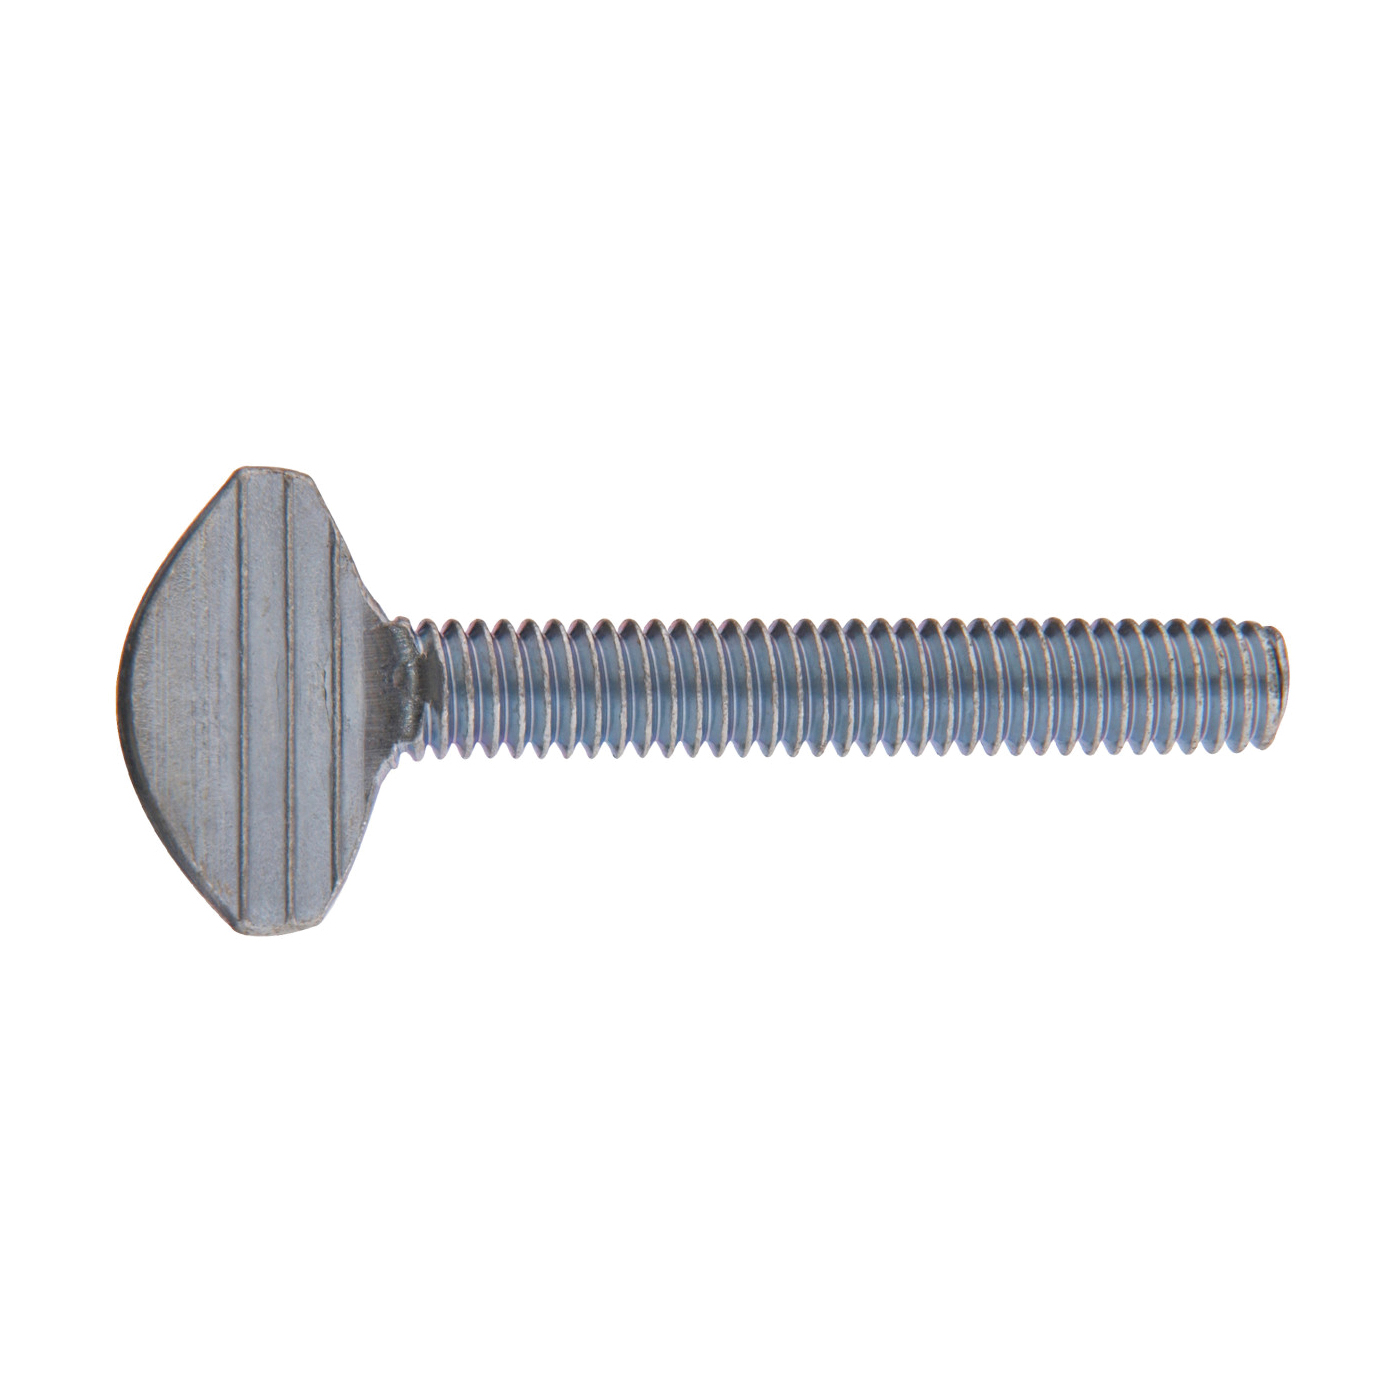 880954 Machine Screw, 1/4-20 Thread, 1-1/2 in L, Coarse Thread, Blunt Point, Steel, Zinc-Plated